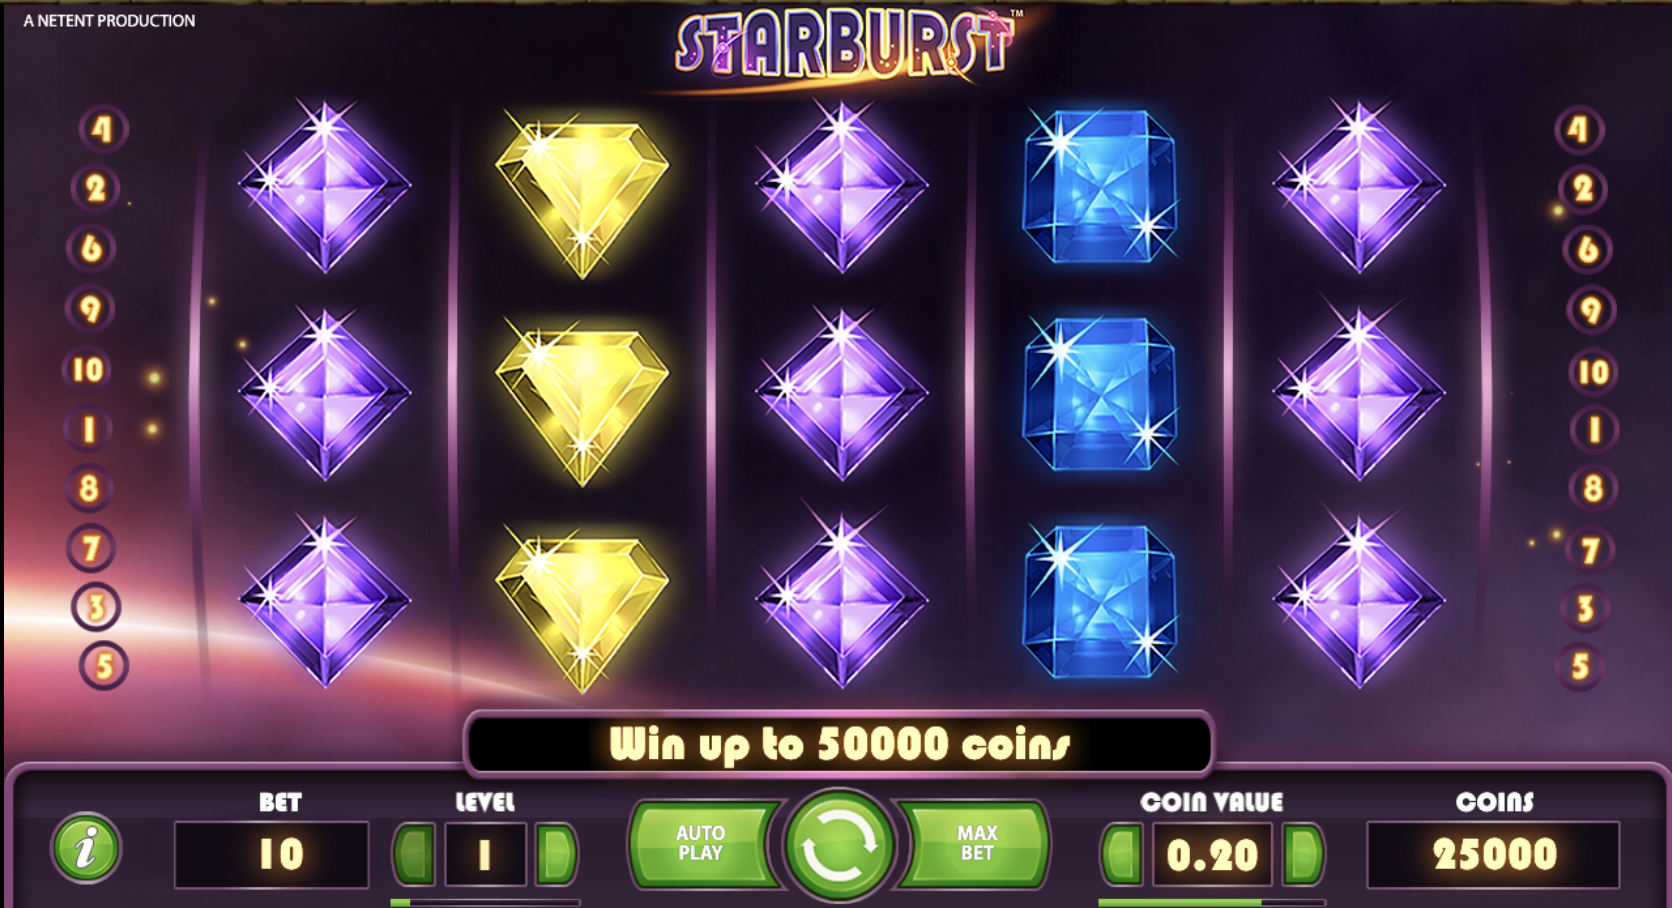 starburst by netent gameplay